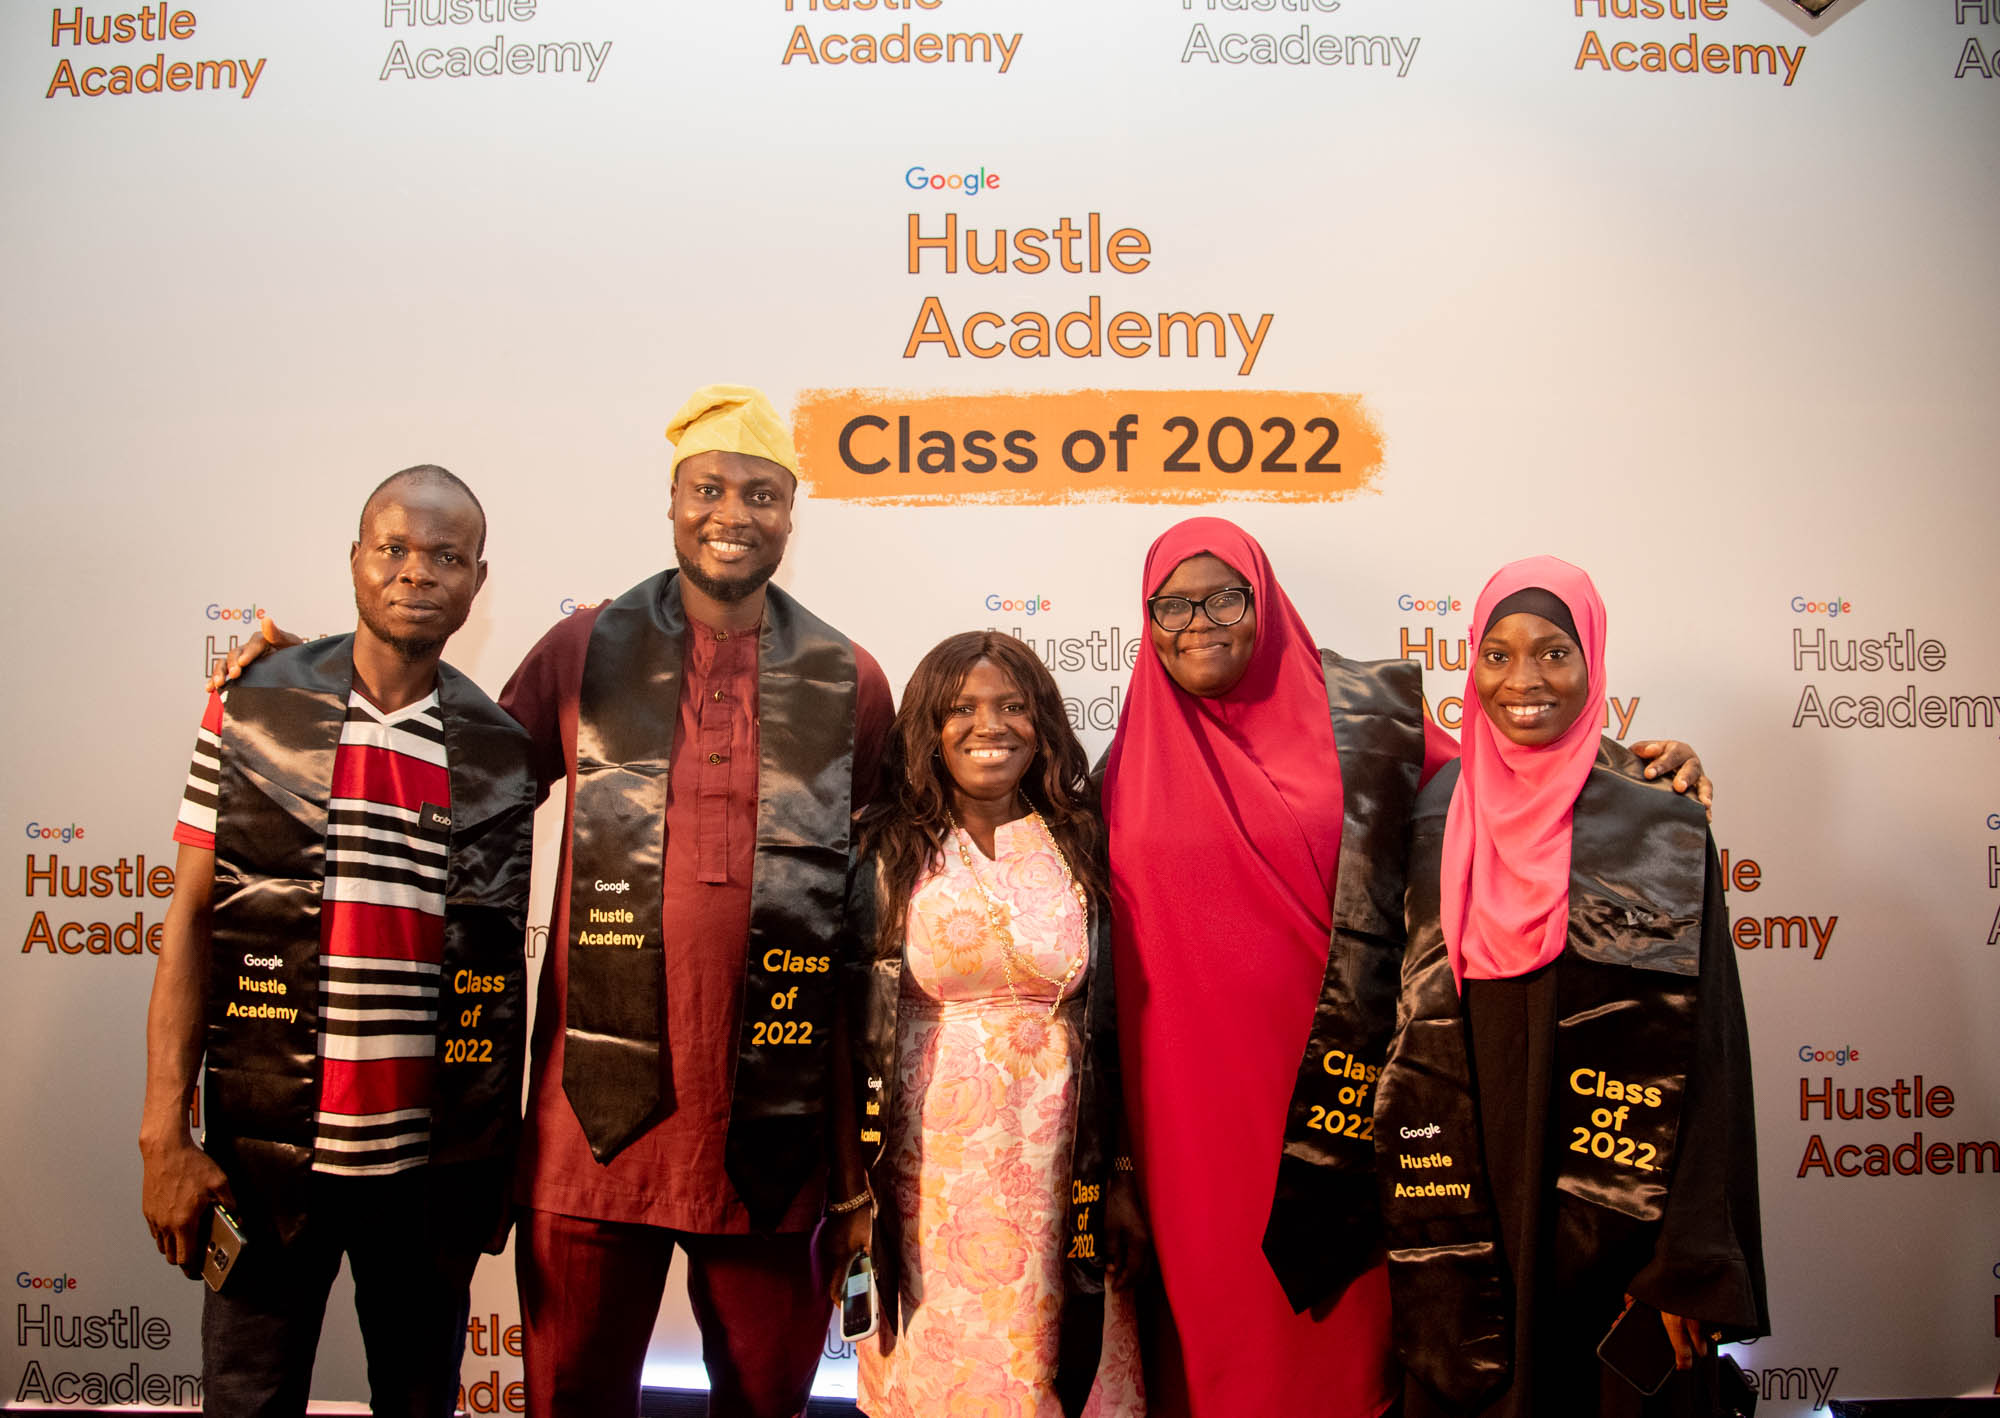 Google Hustle Academy: 5000 Entrepreneurs Graduate From The Hustle Academy Training Programme